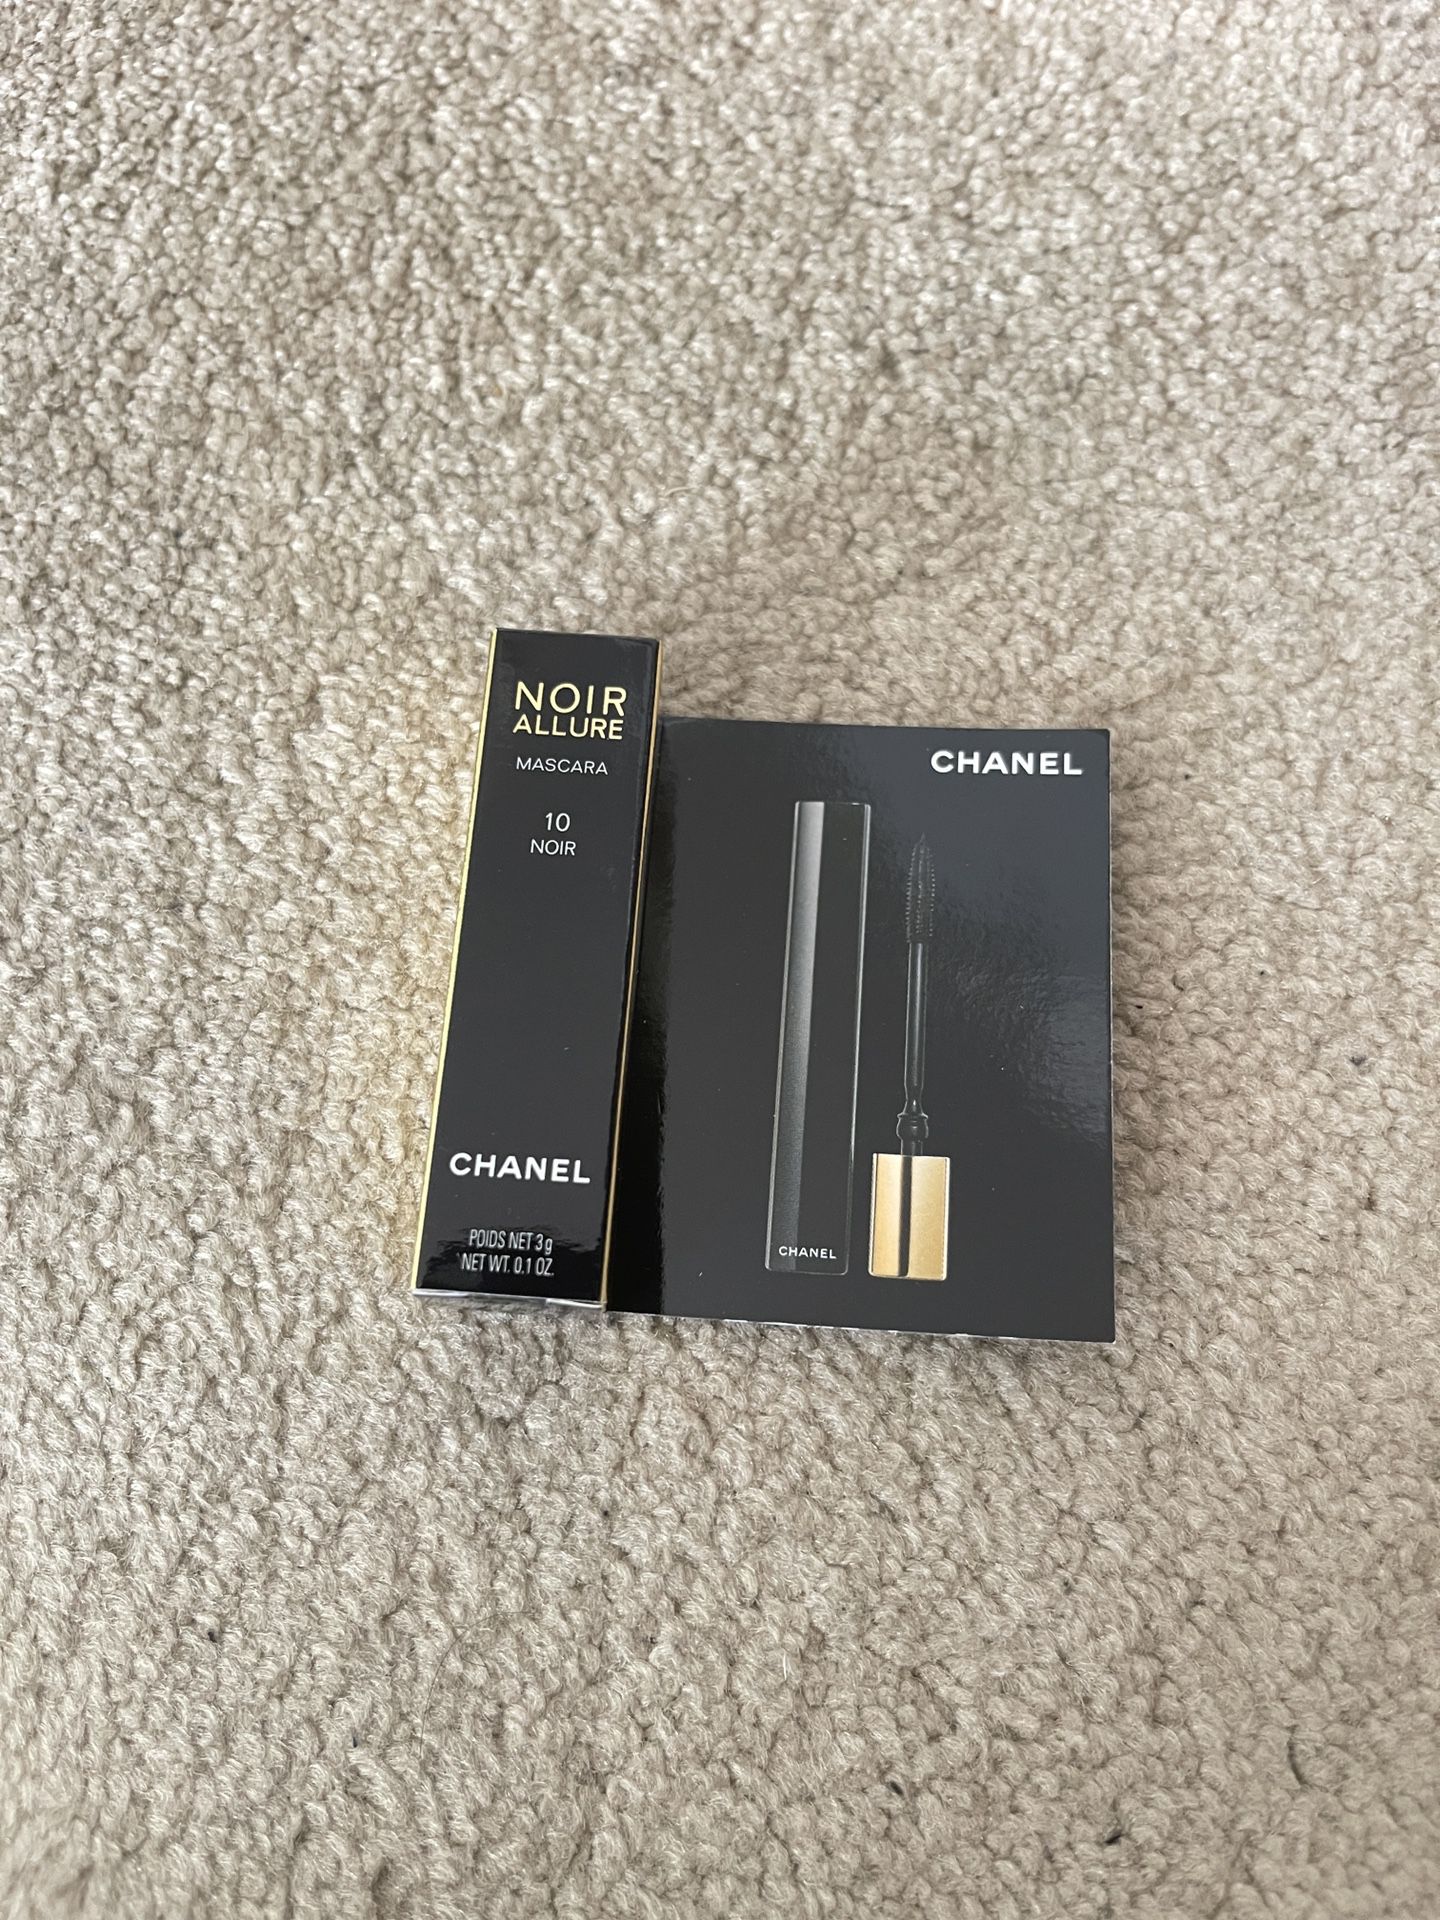 Chanel Noir Allure mascara 3g